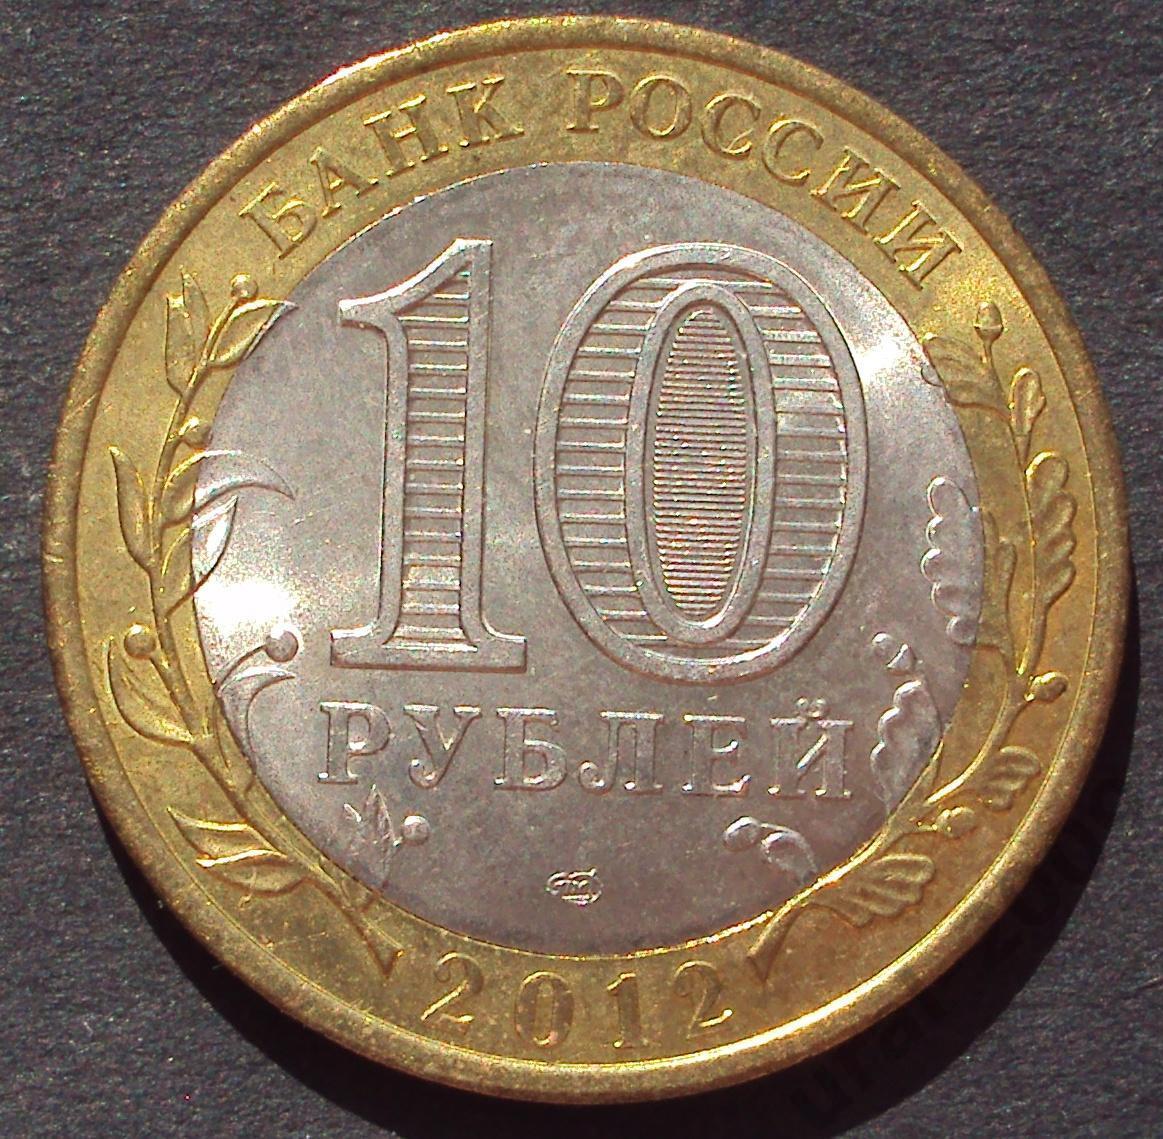 10 рублей 2012 год! Белозерск. СПМД. (А-31).